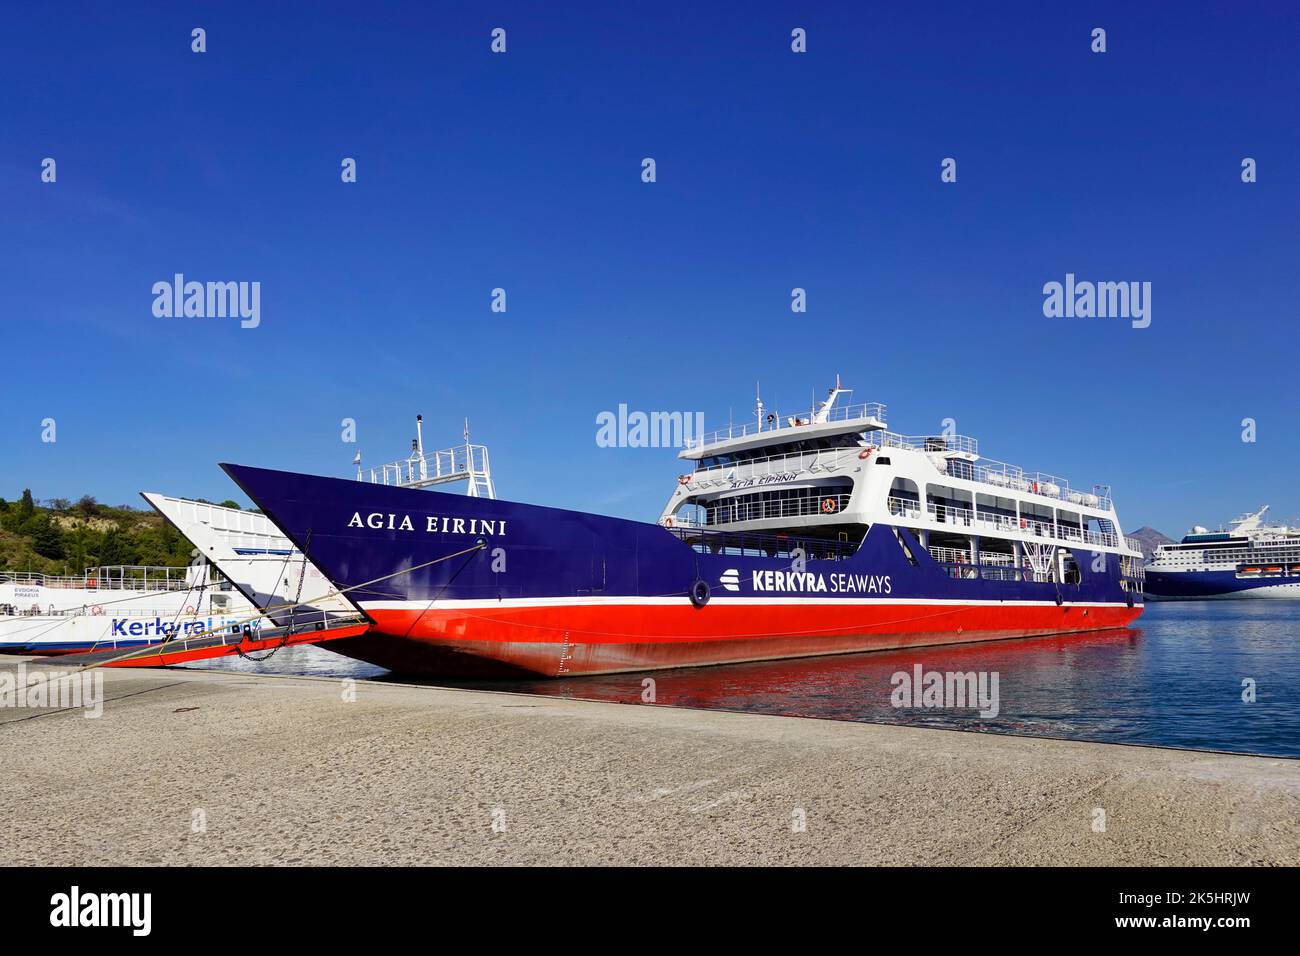 Agia Eirini, Kerkyra Seaways, Corfu, Greece Stock Photo